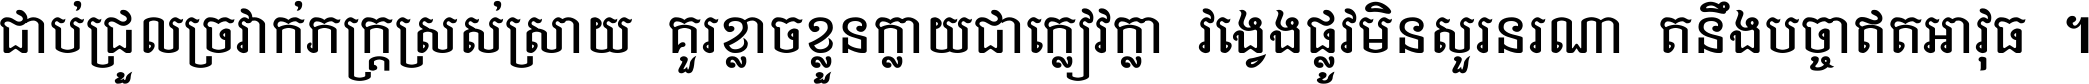 Khmer Mondulkiri A Bold